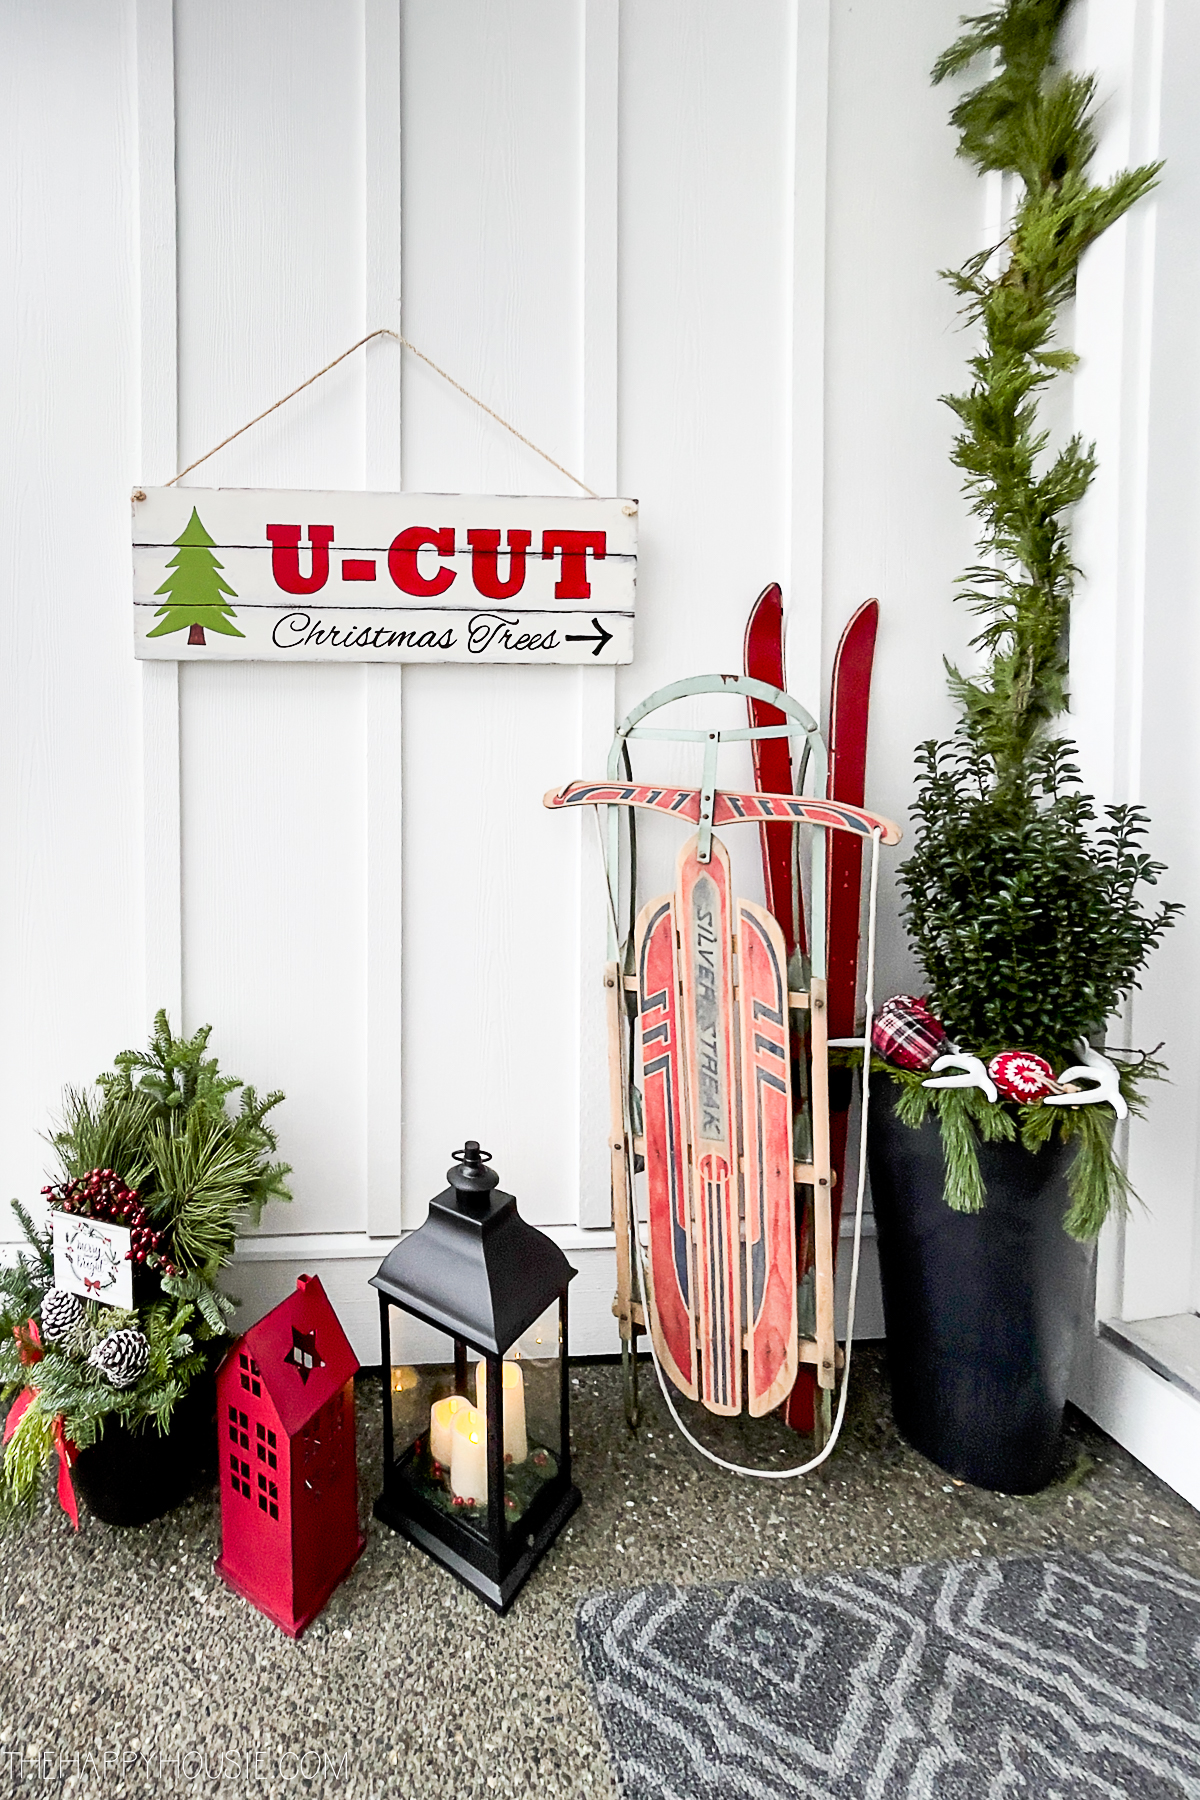 a cheerful DIY U-Cut Christmas Trees sign